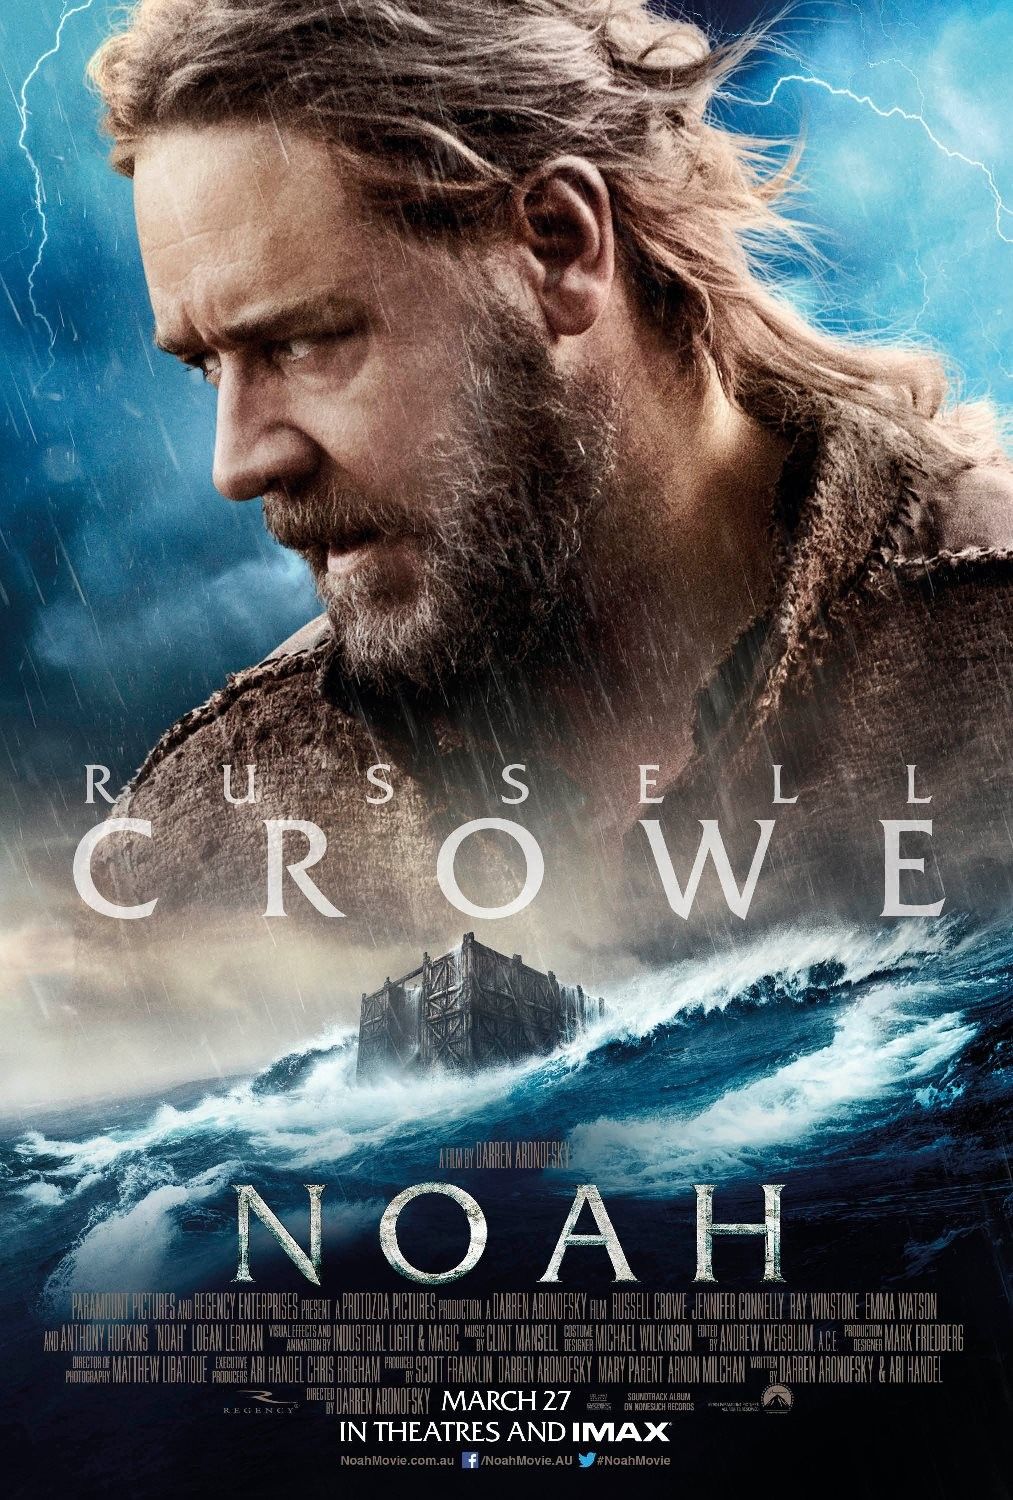 Noah Character Poster 1